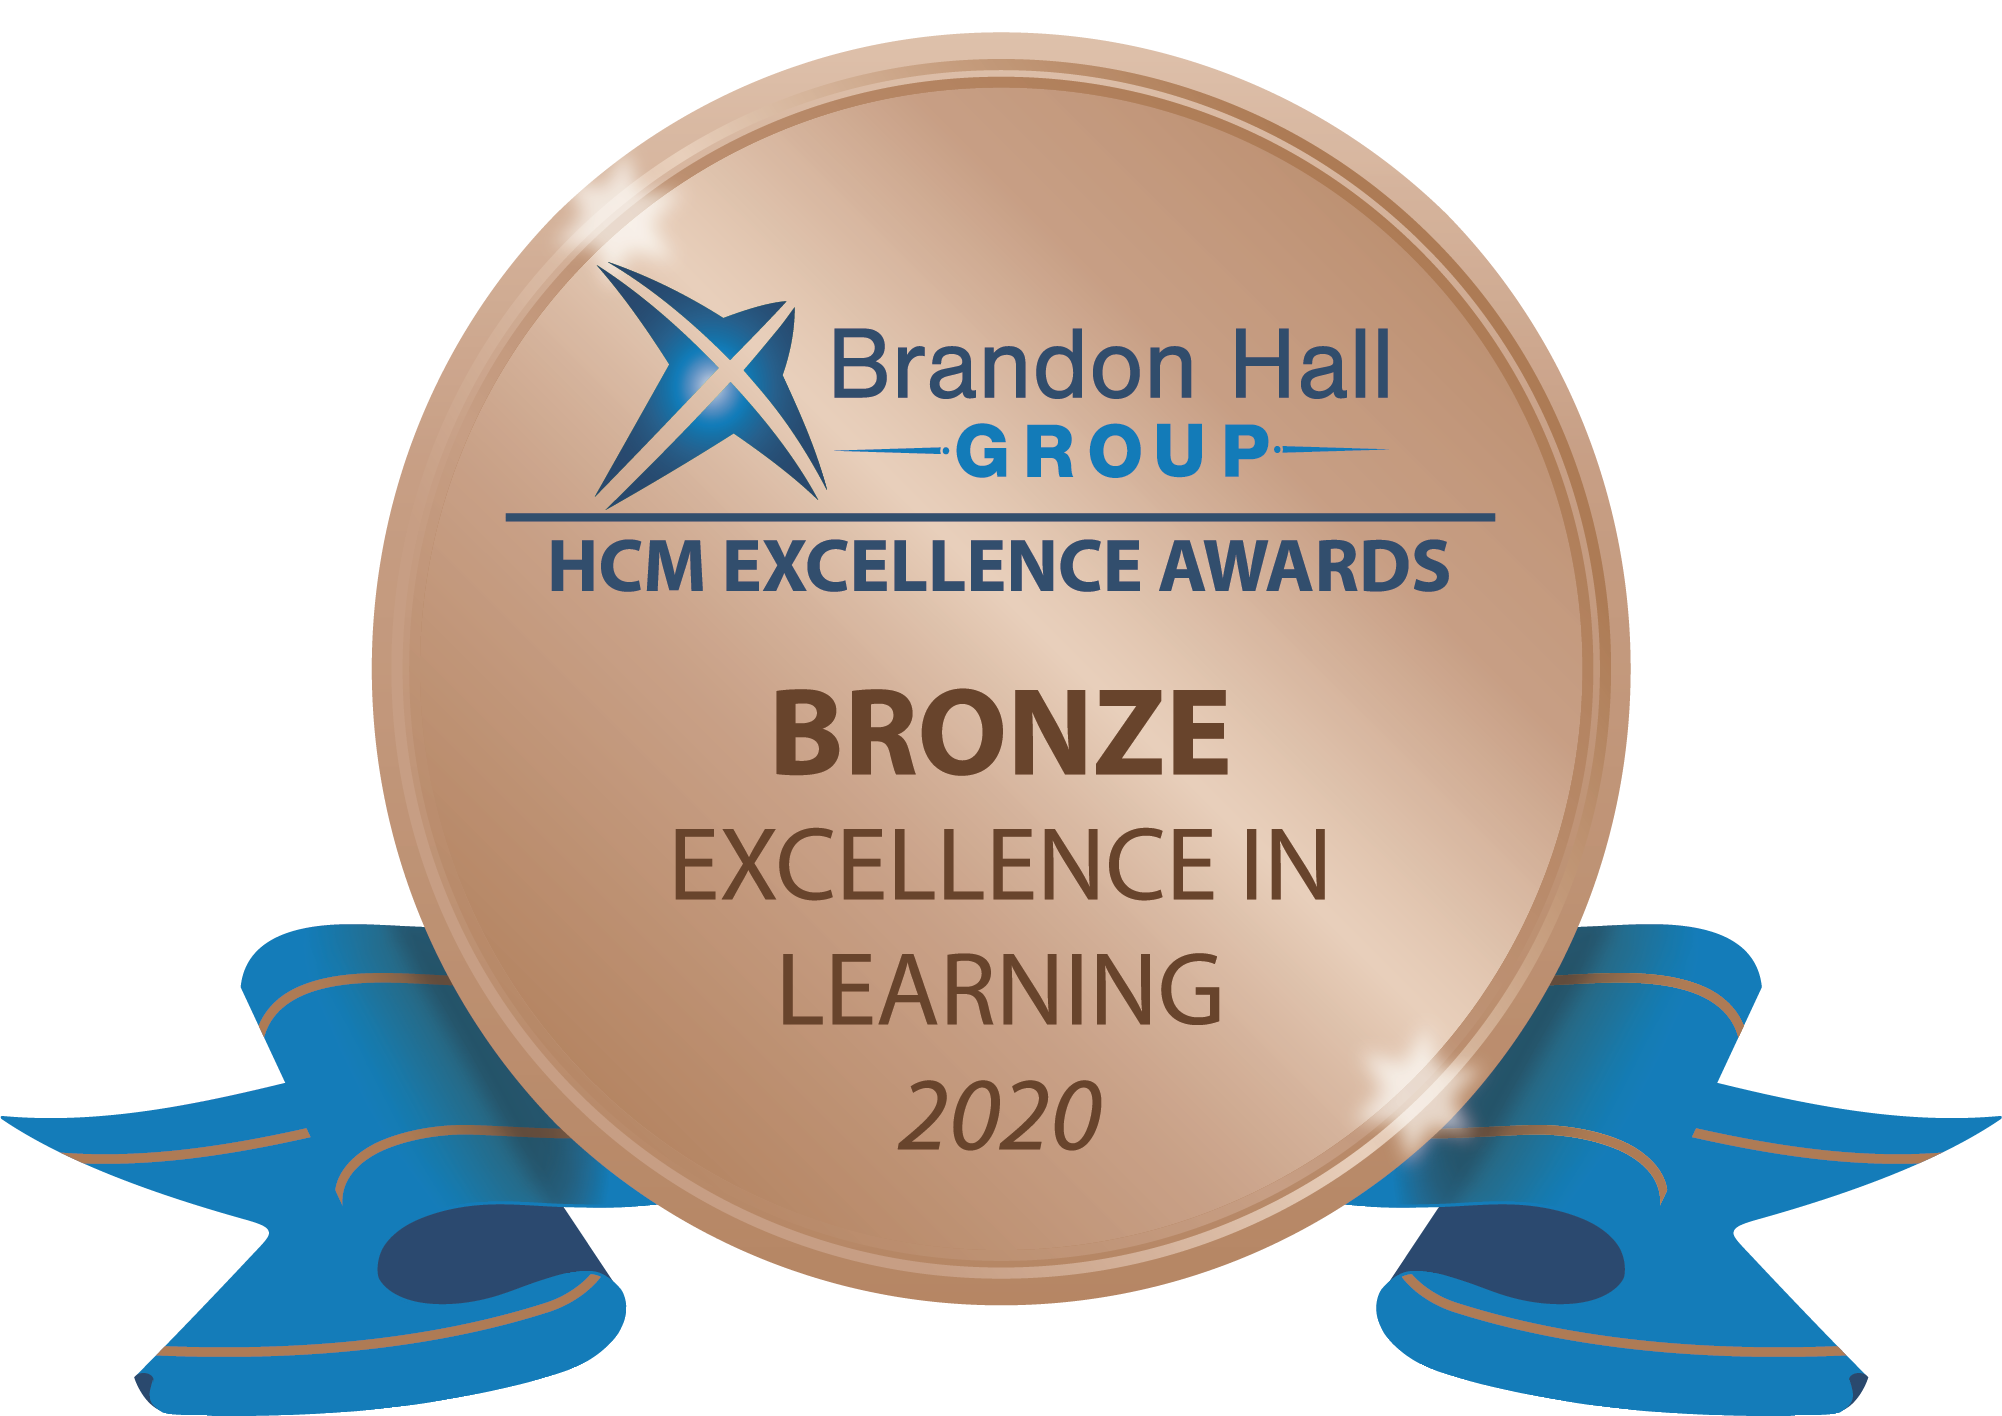 Bronze Award medal from Brandon Hall Group HCM Excellence Awards